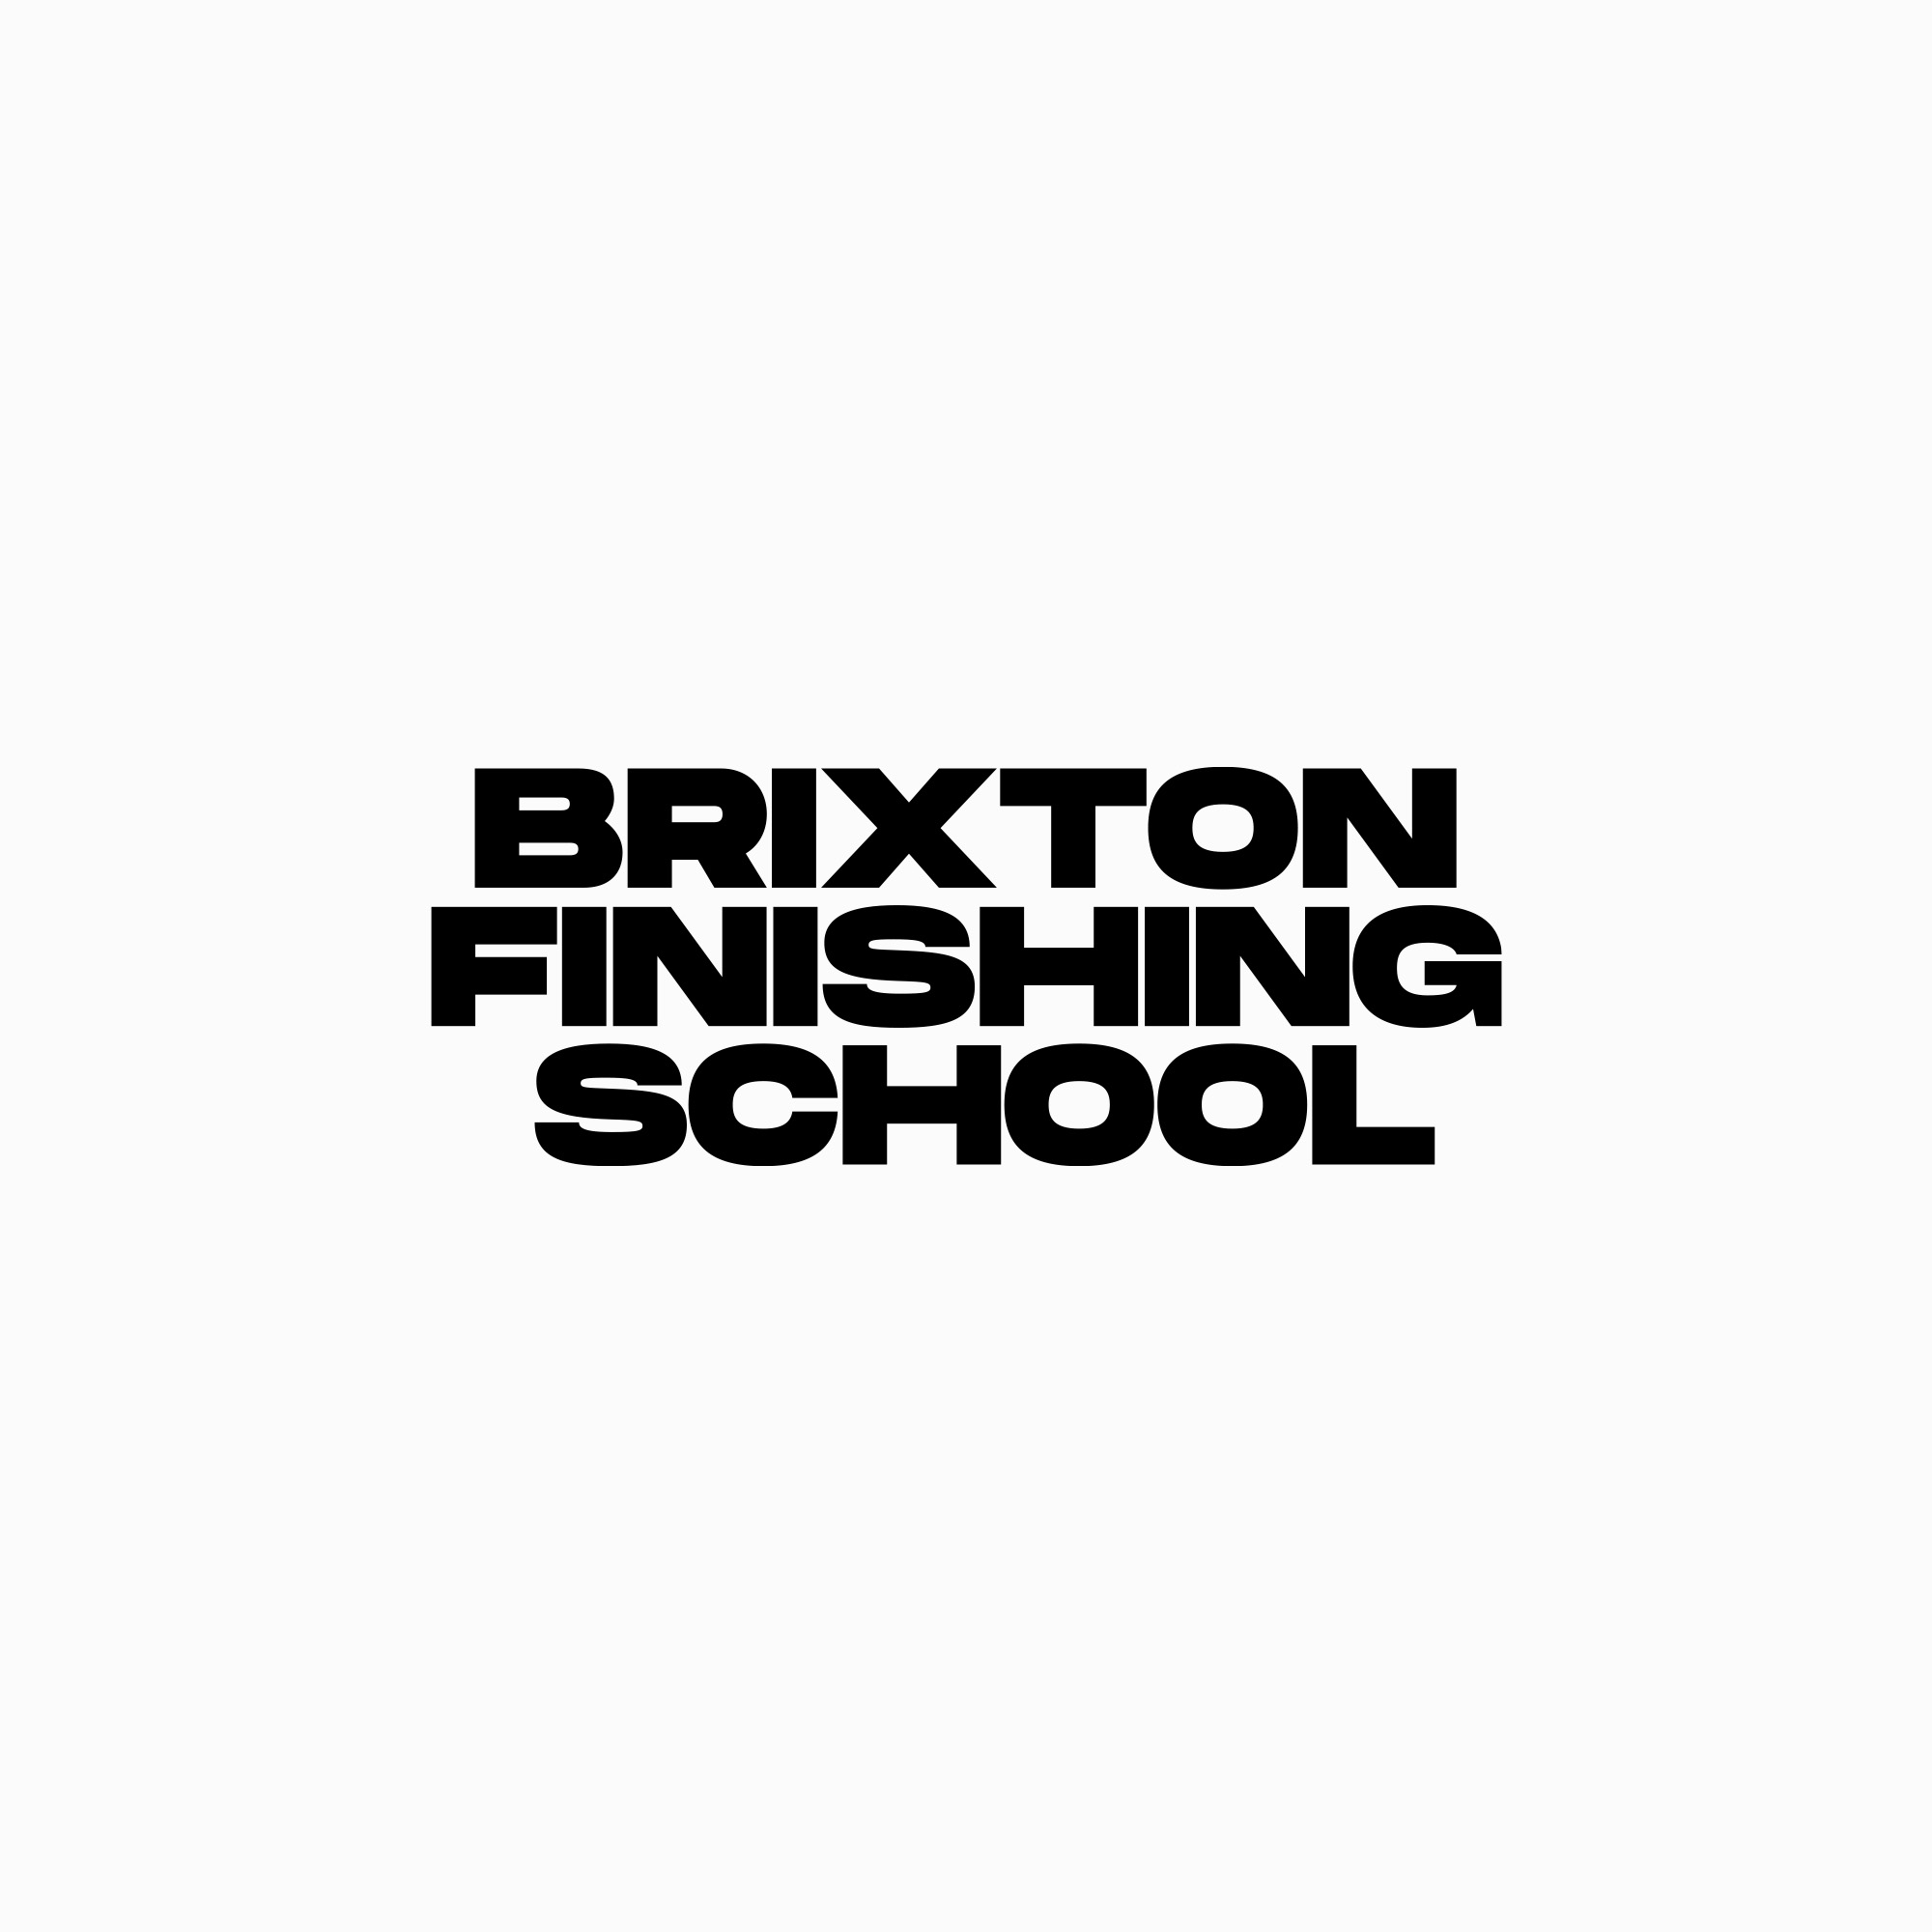 Brixton_Finishing_School_White_1-1